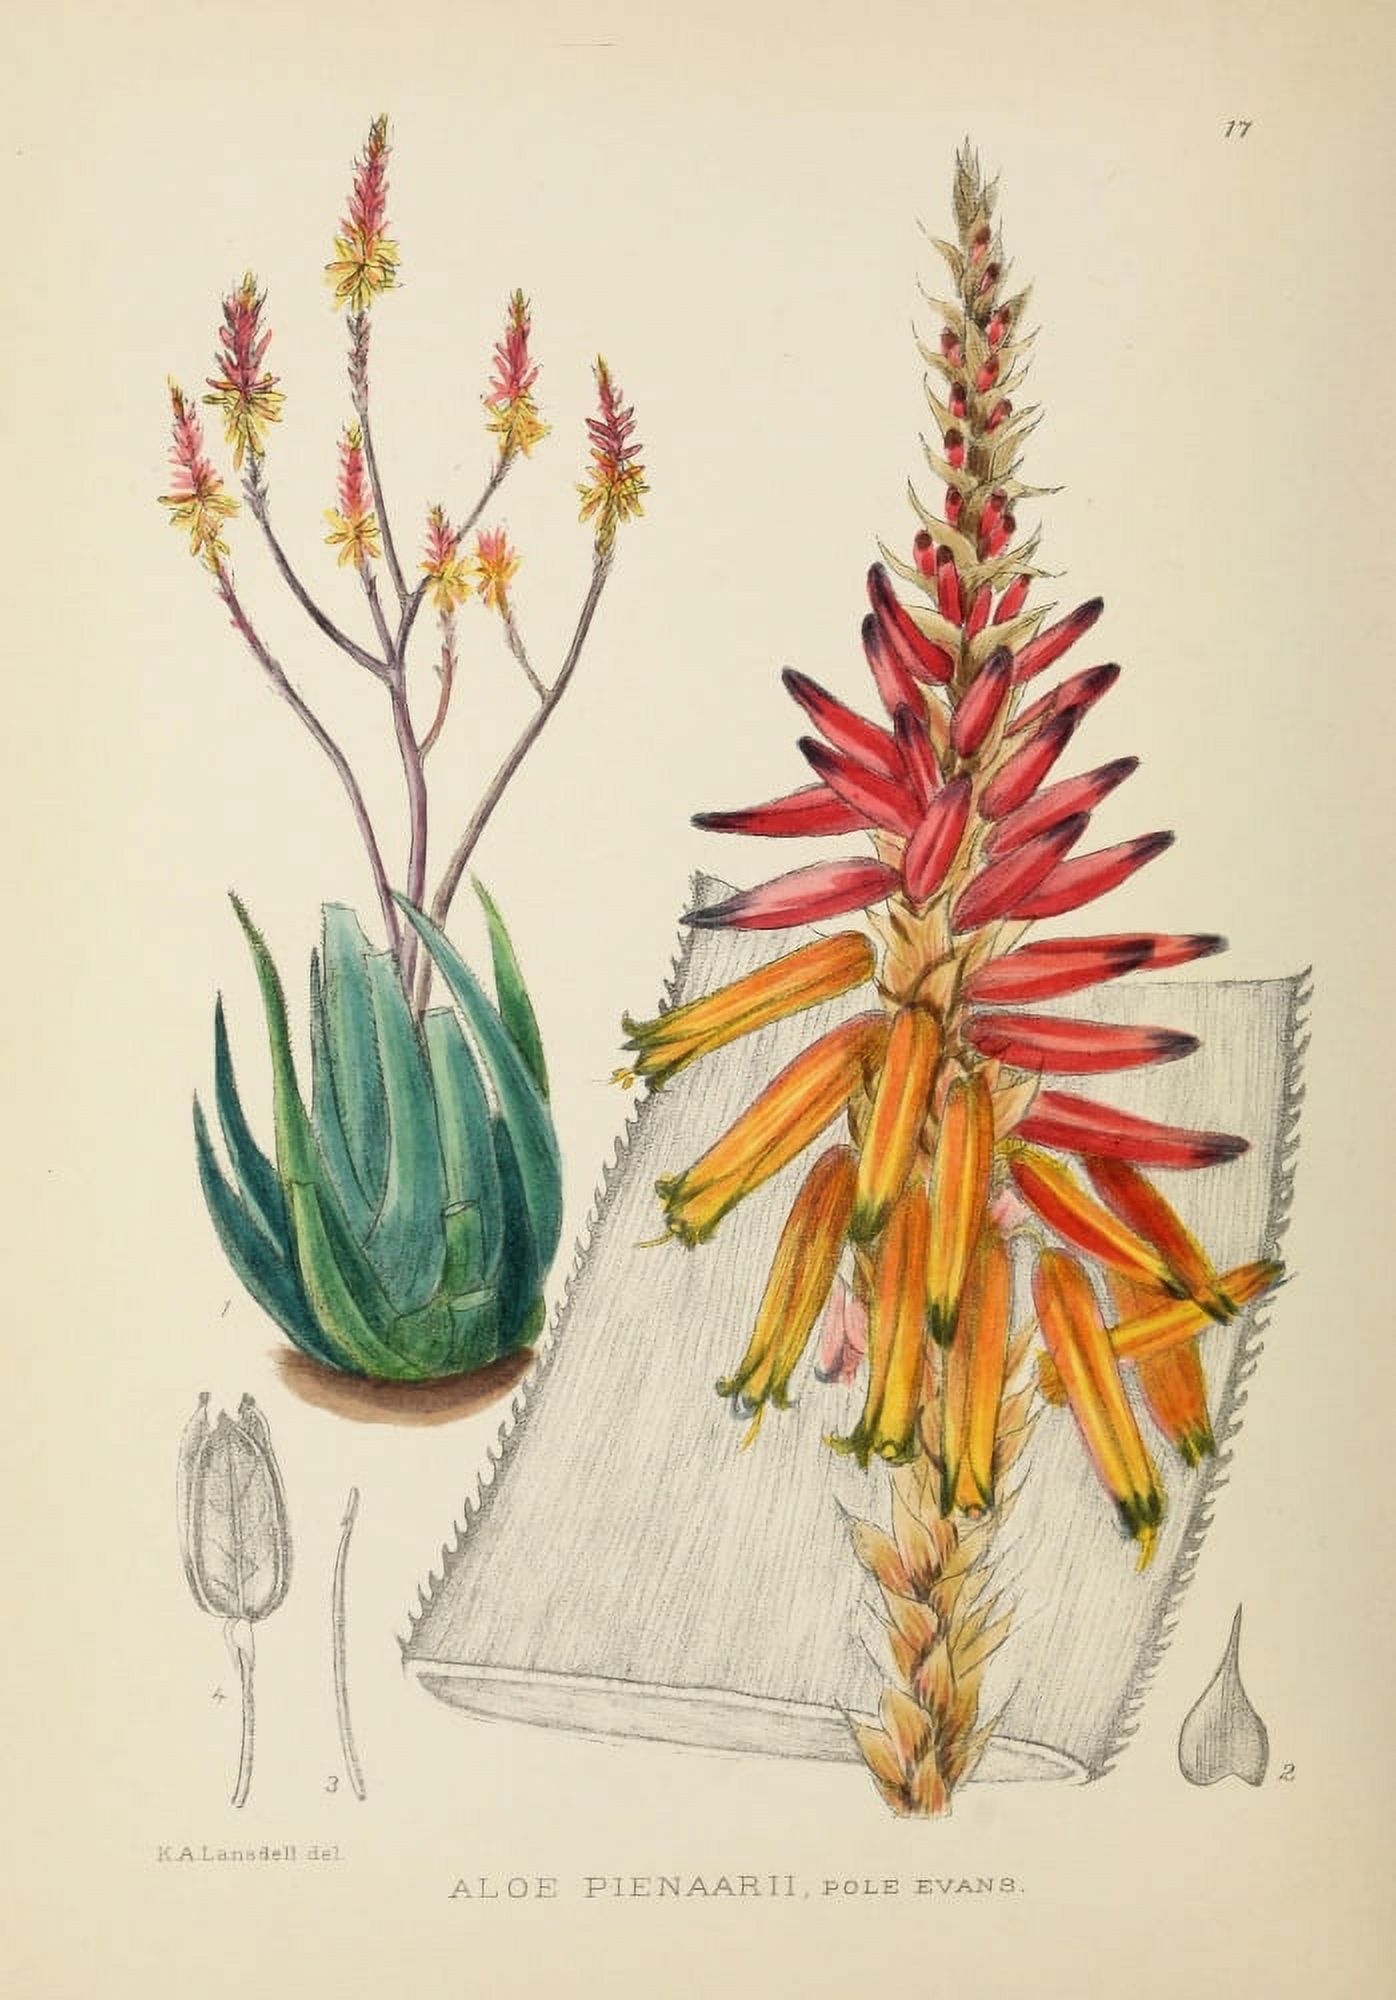 The Flowering Plants of Africa 1921 Aloe Pienaarii Poster Print by  K.A. Lansdell (24 x 36) - image 1 of 1